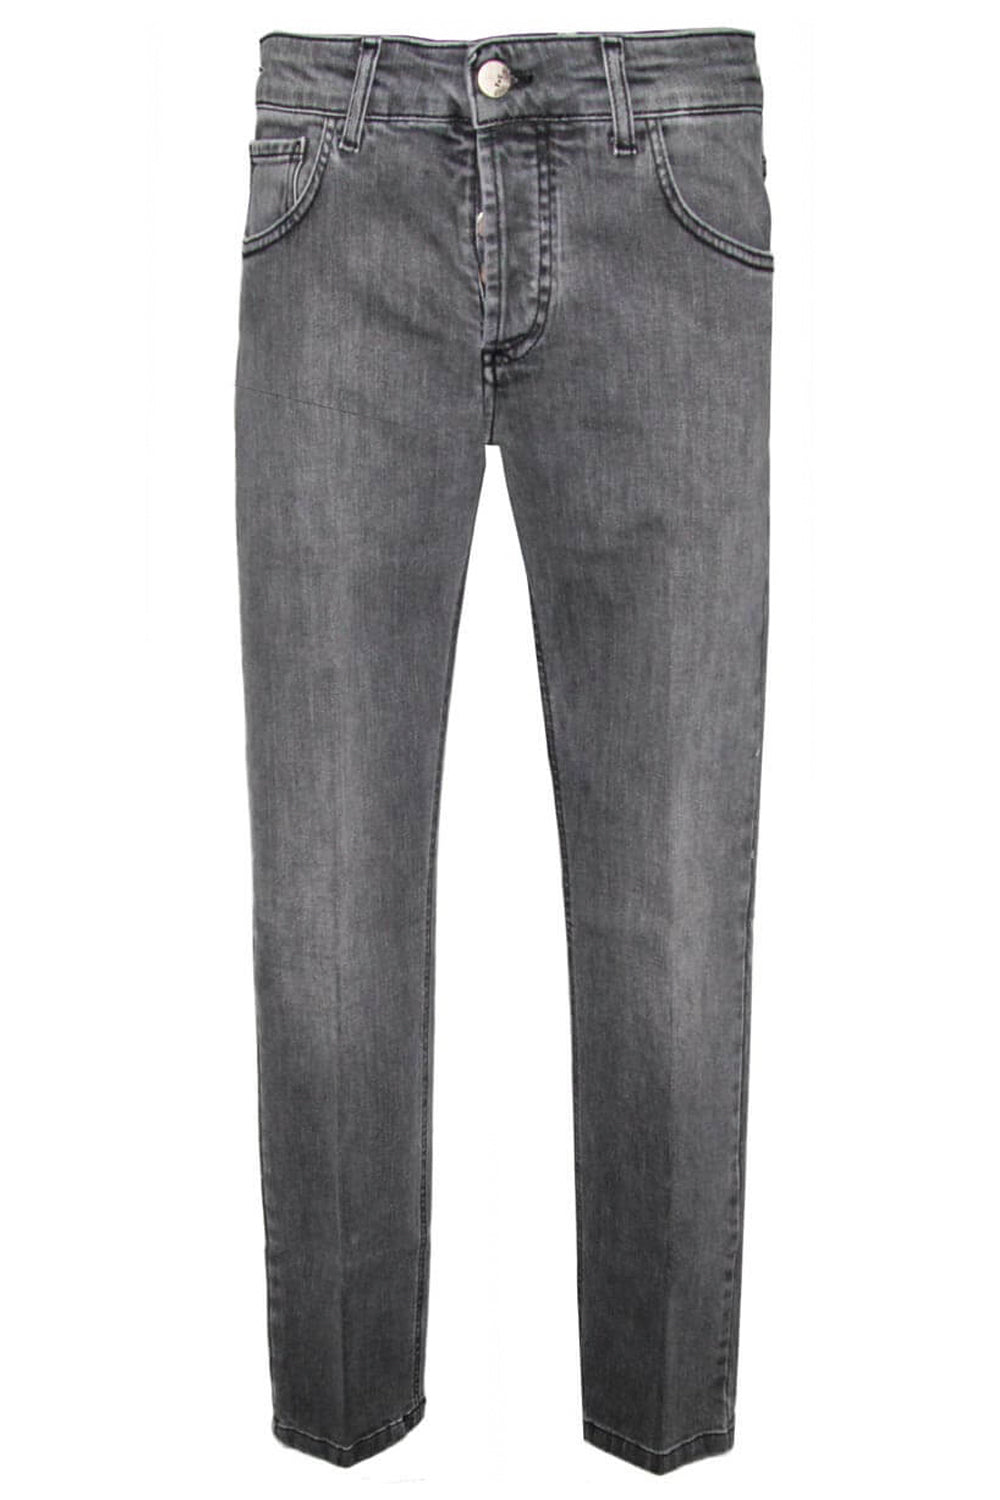 PANTALONE jeans grigio- ENTRE AMIS